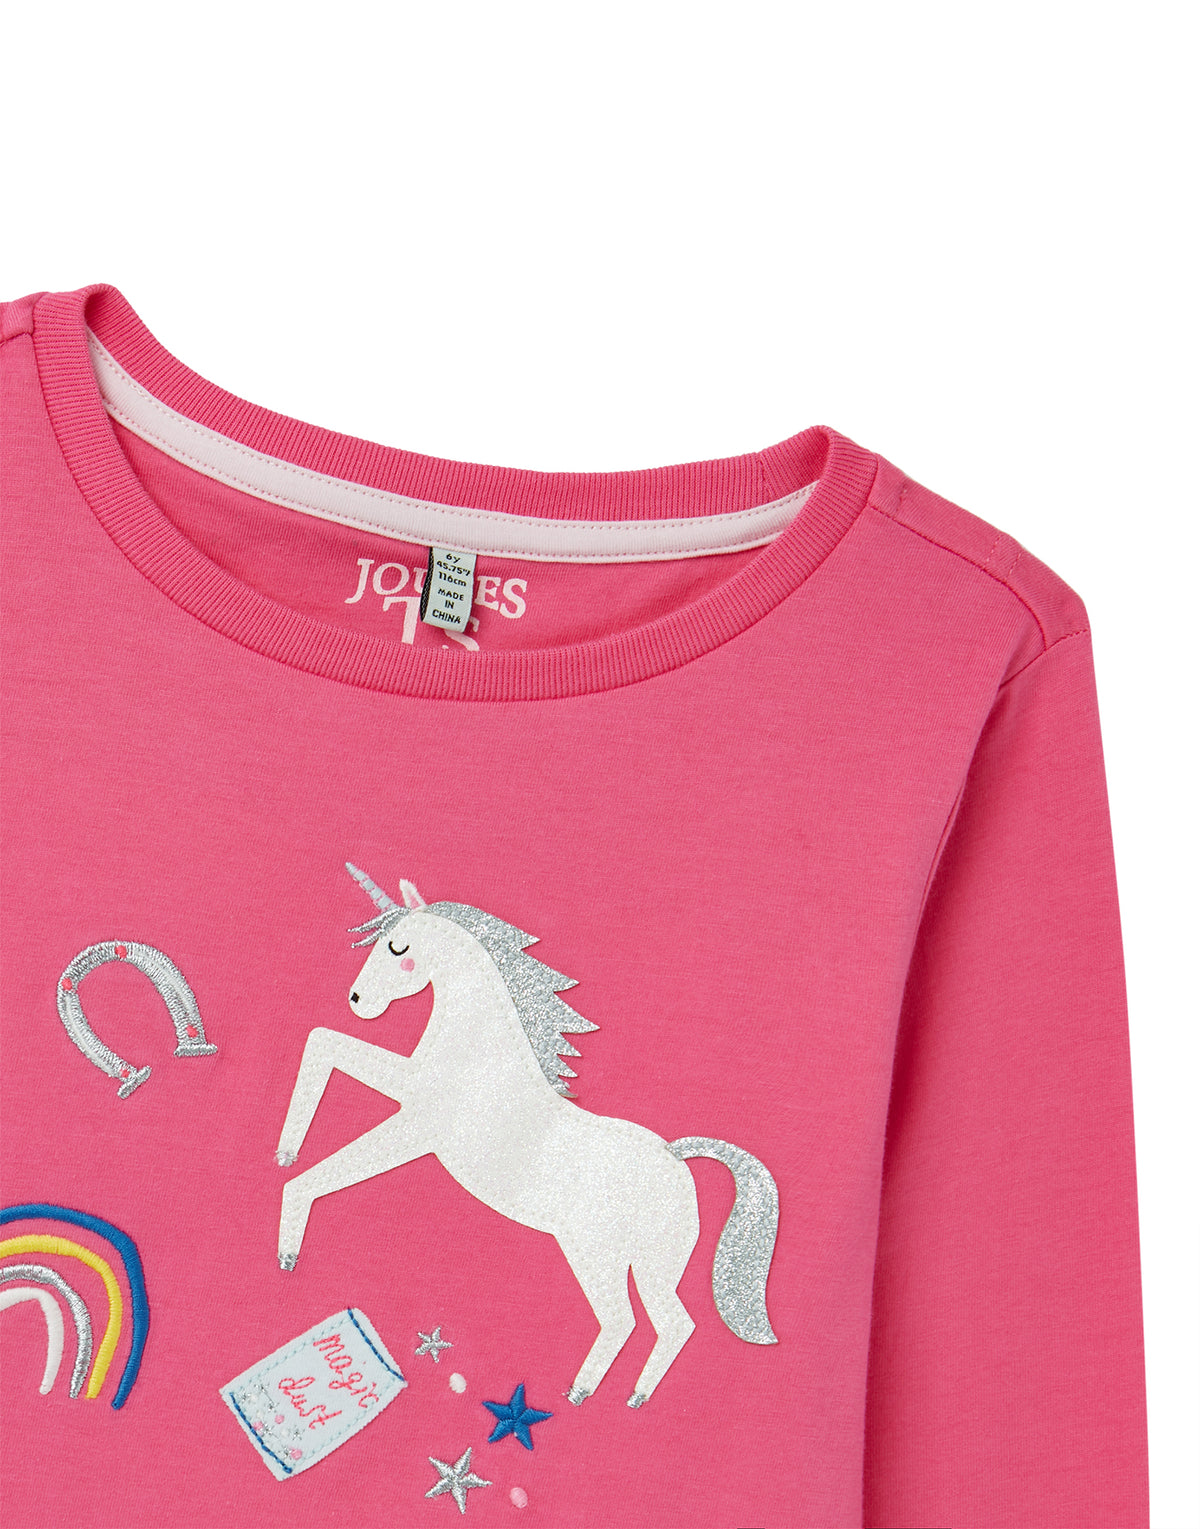 Mädchen Langarmshirt Ava Pink Unicorn 213685